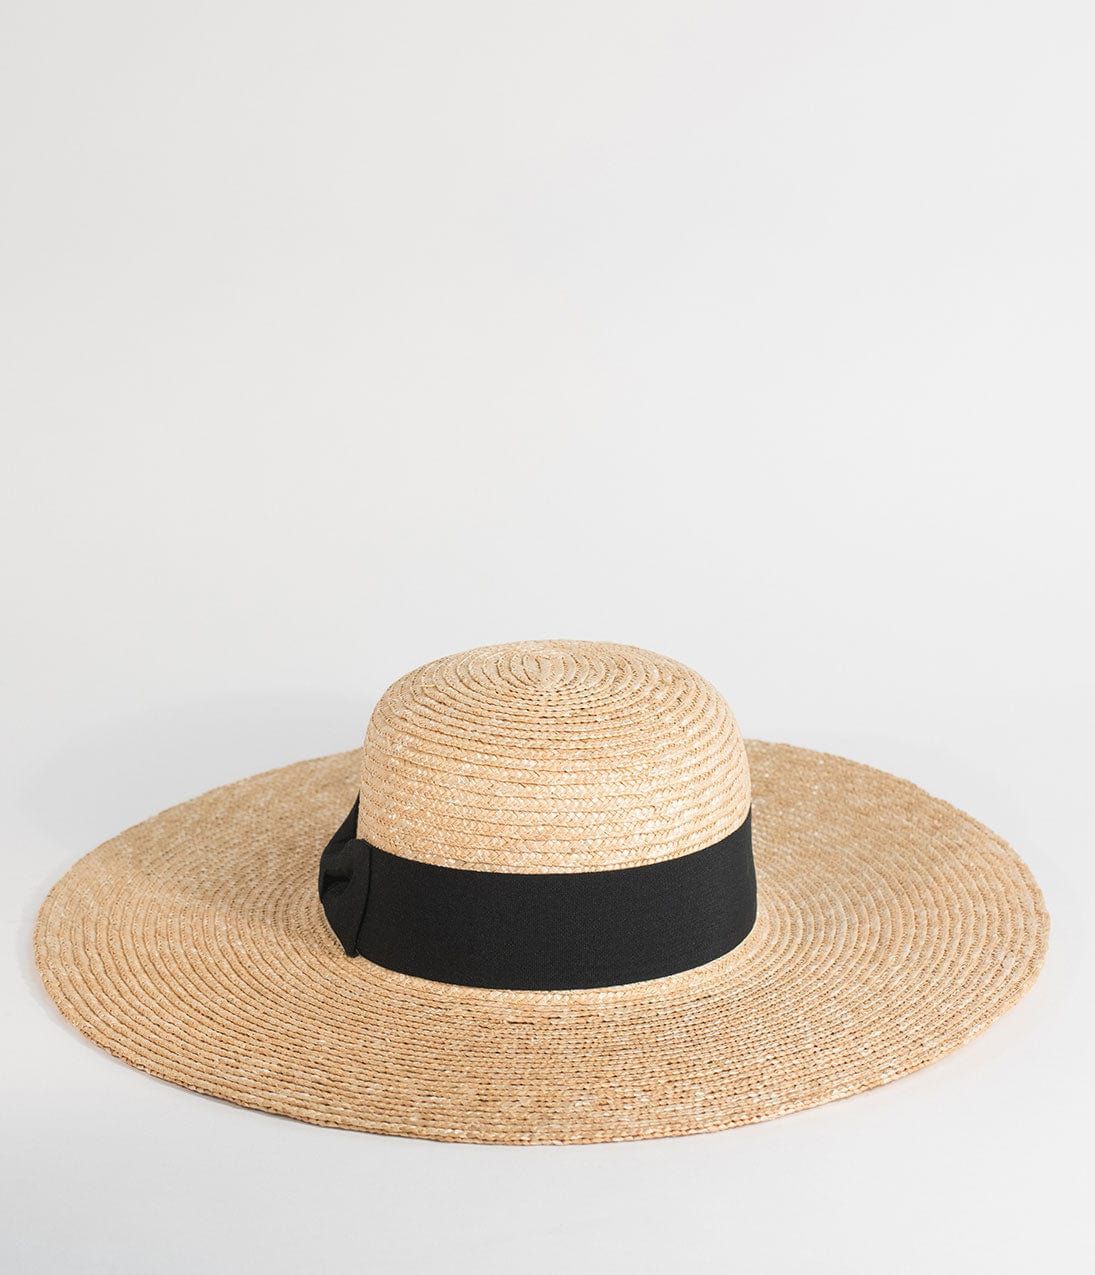 Vintage Style Tan Straw & Black Ribbon Sun Hat | UniqueVintage